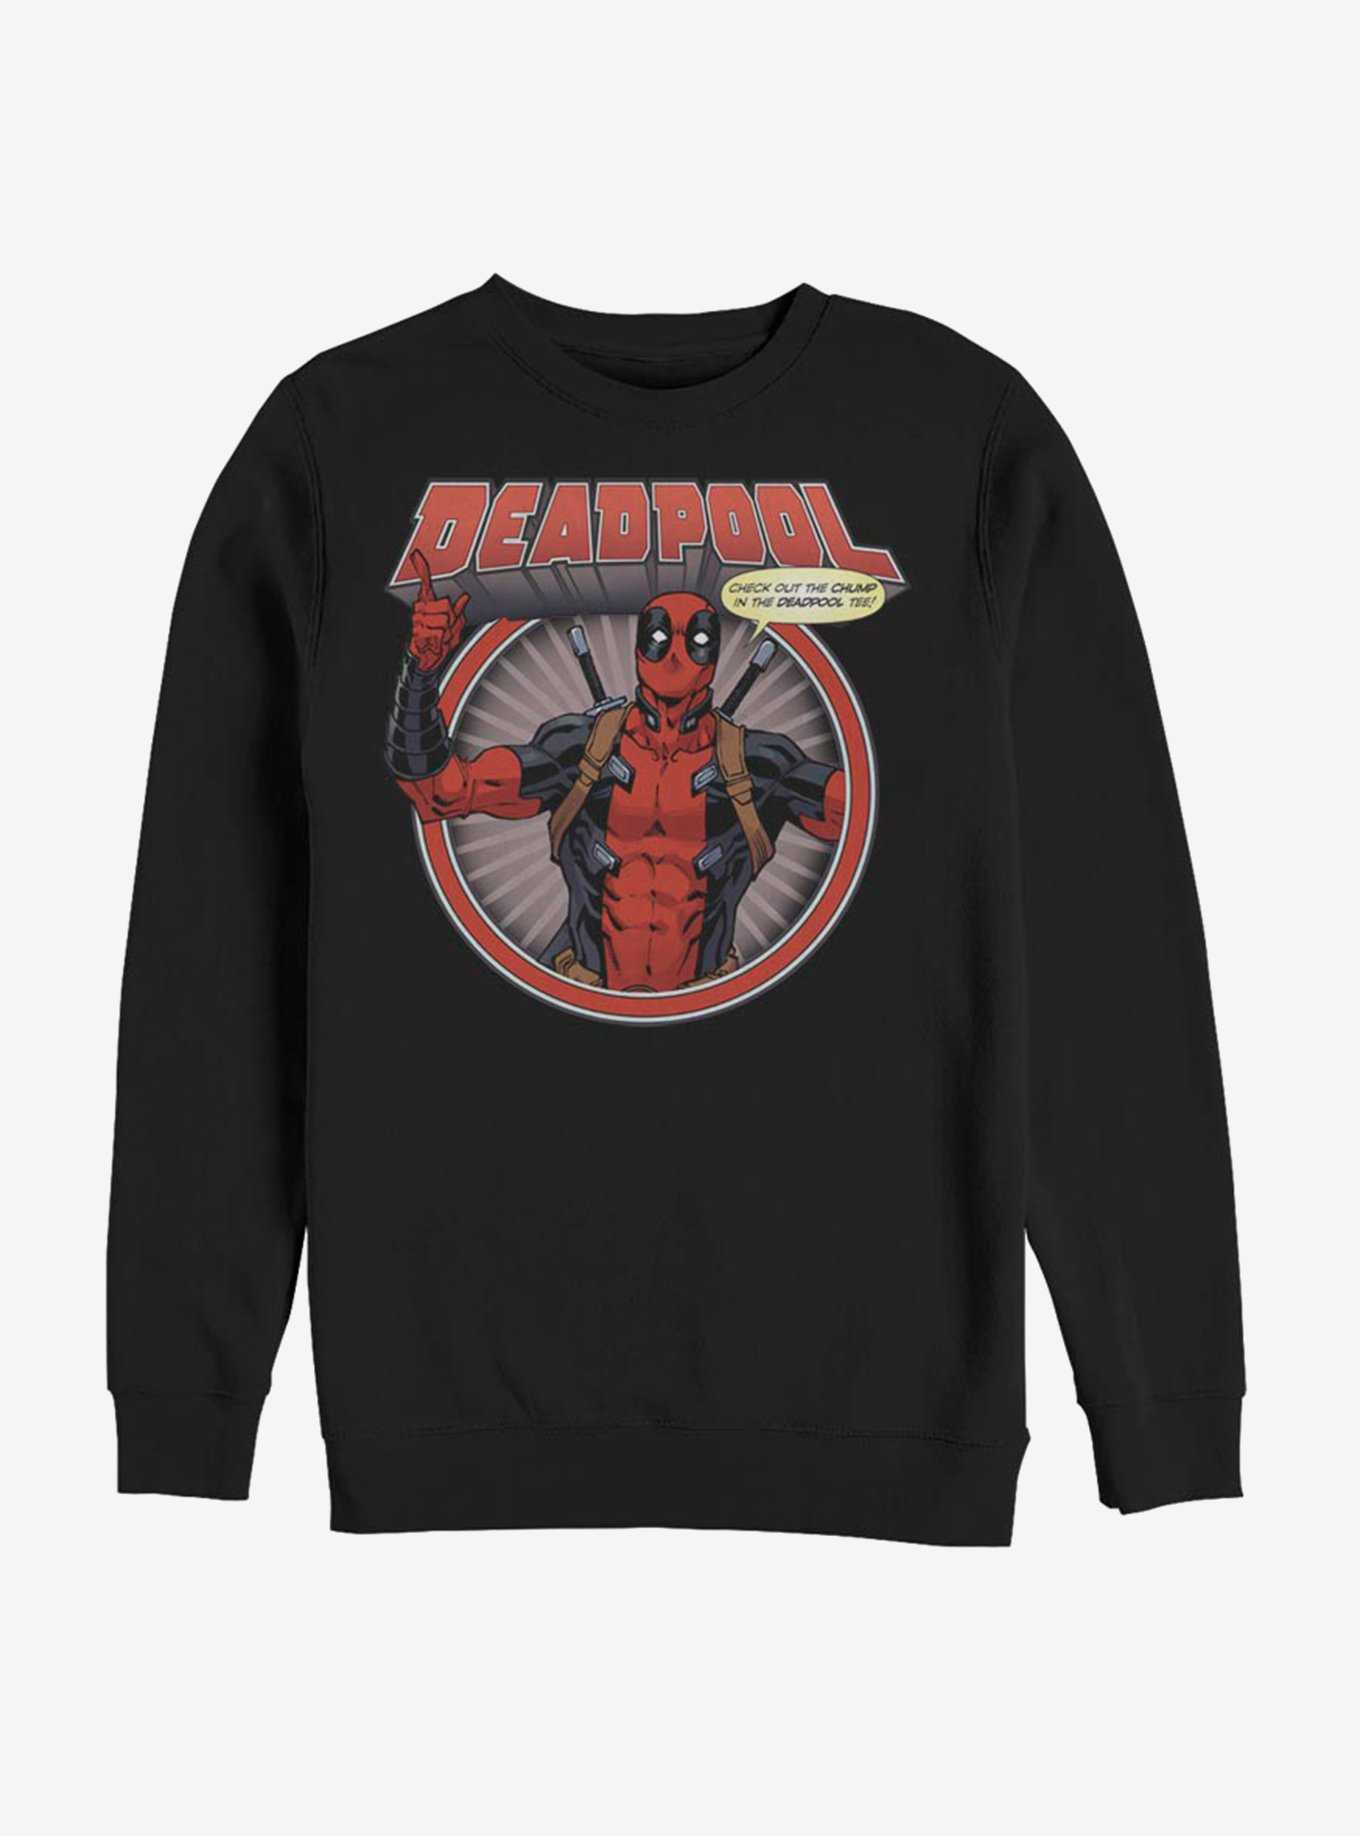 Marvel Deadpool Deadpool Chump Sweatshirt, , hi-res